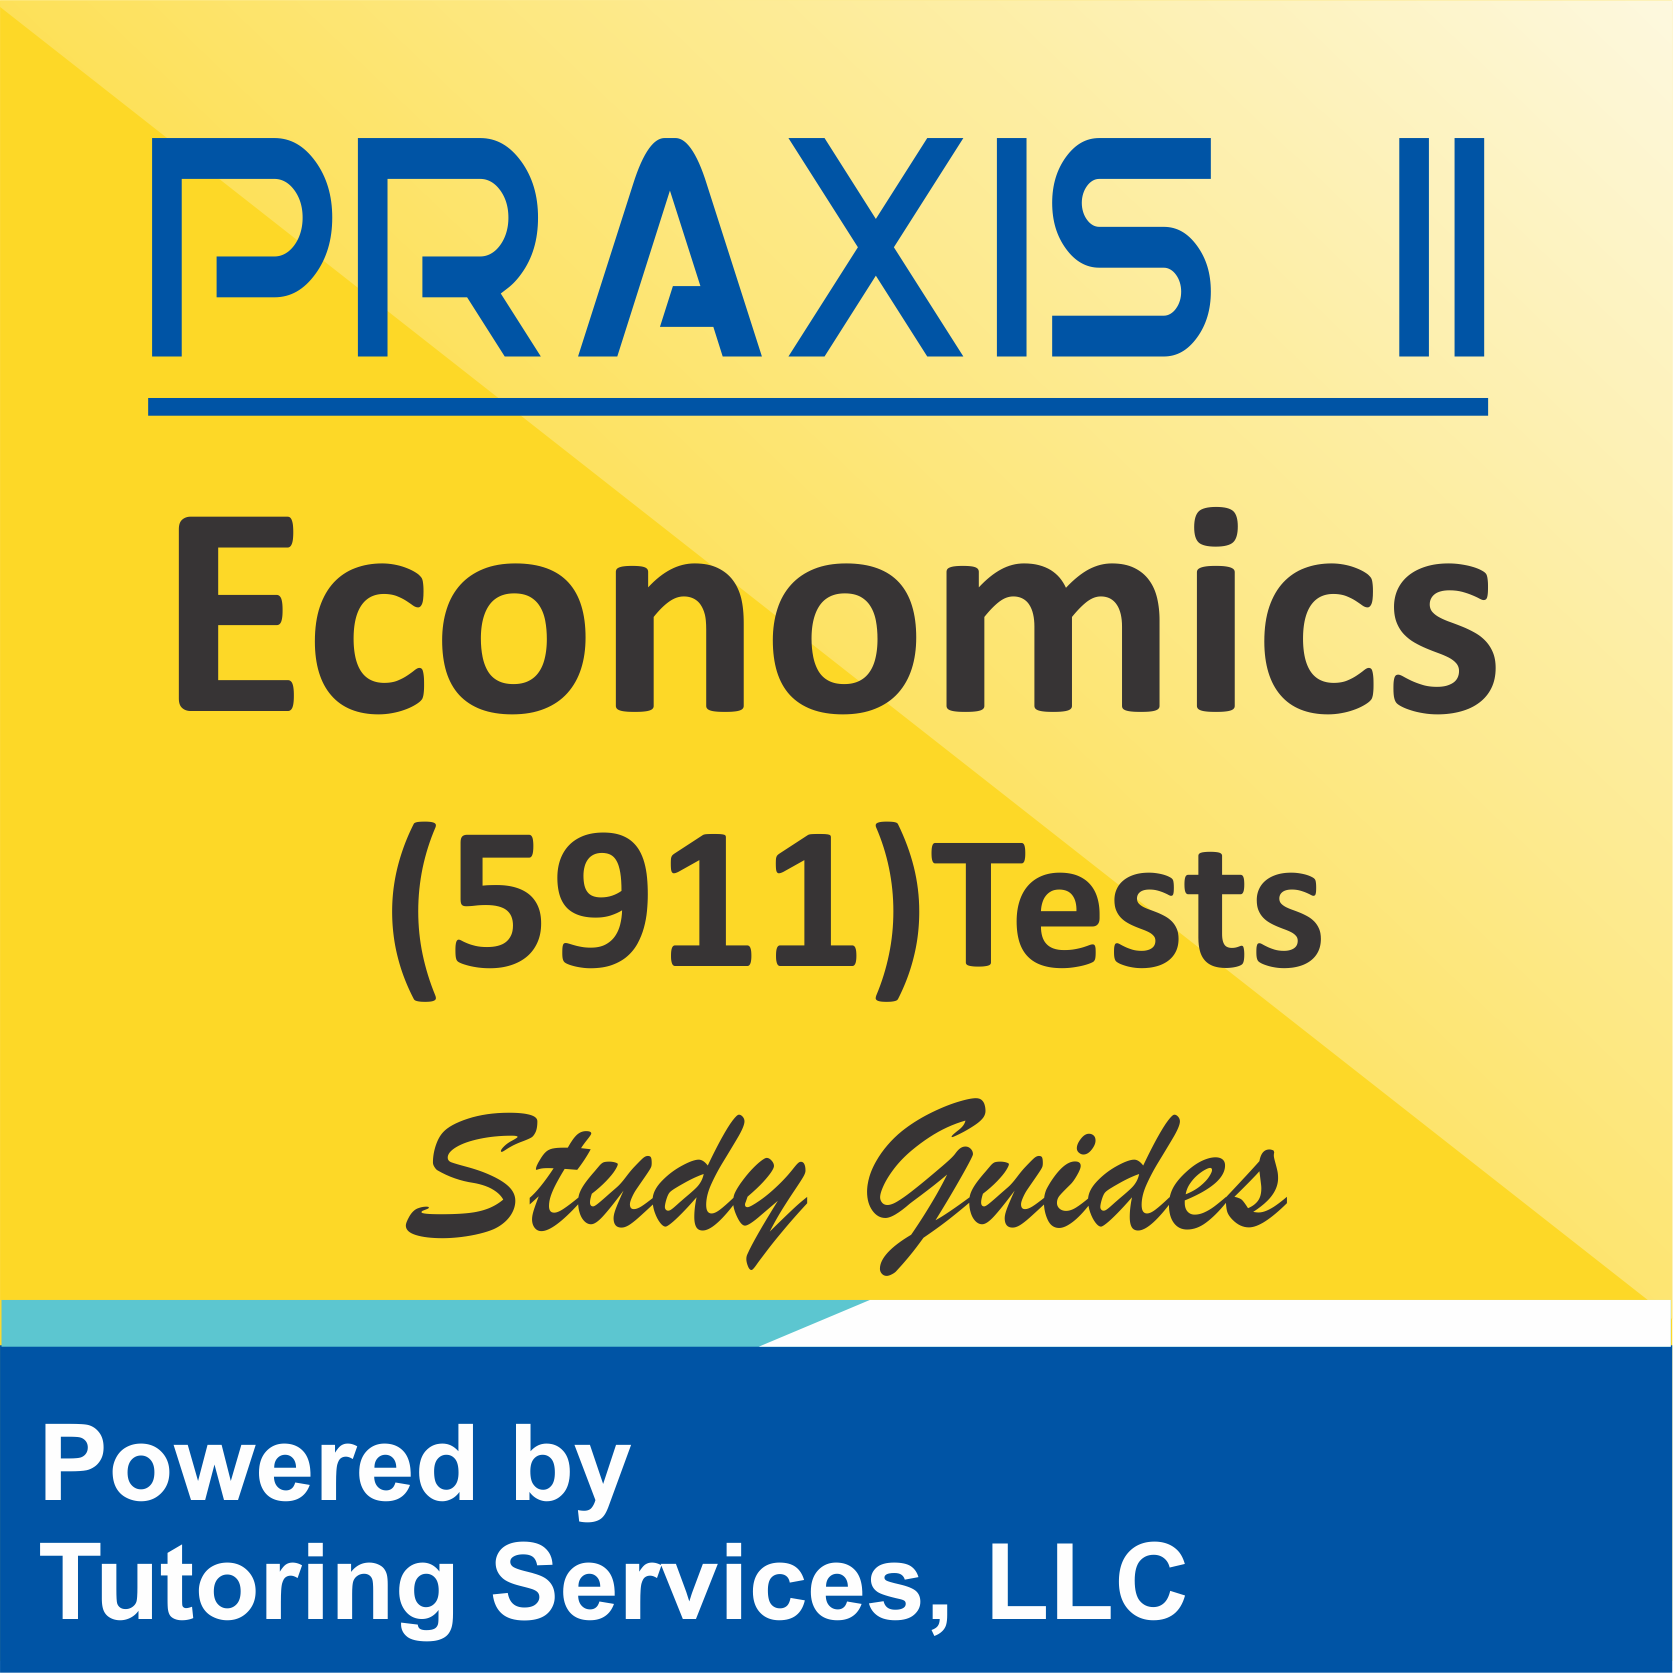 Praxis II Economics (5911) Examination Description